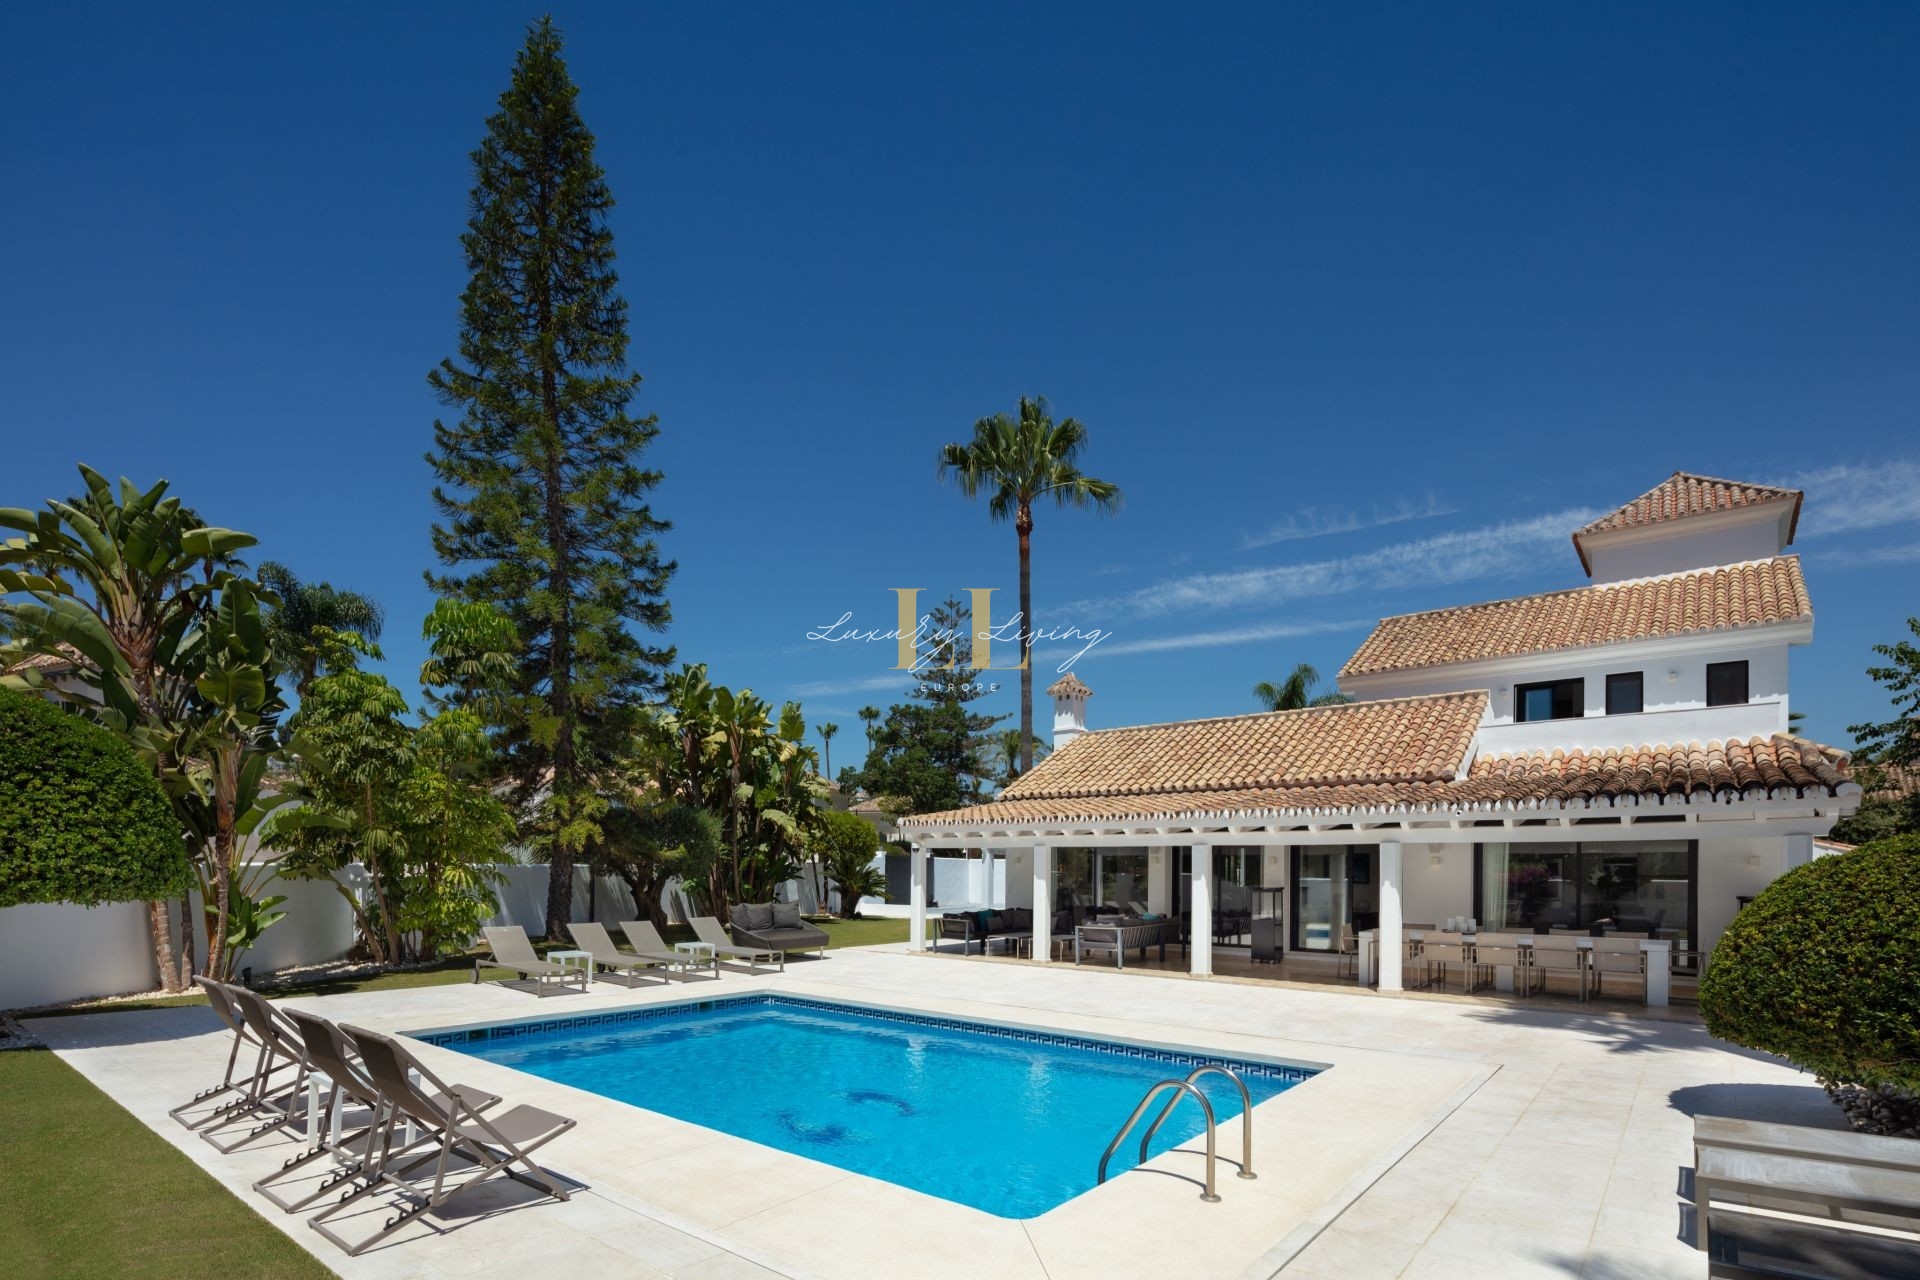 Villa Monet Accommodation in Marbella